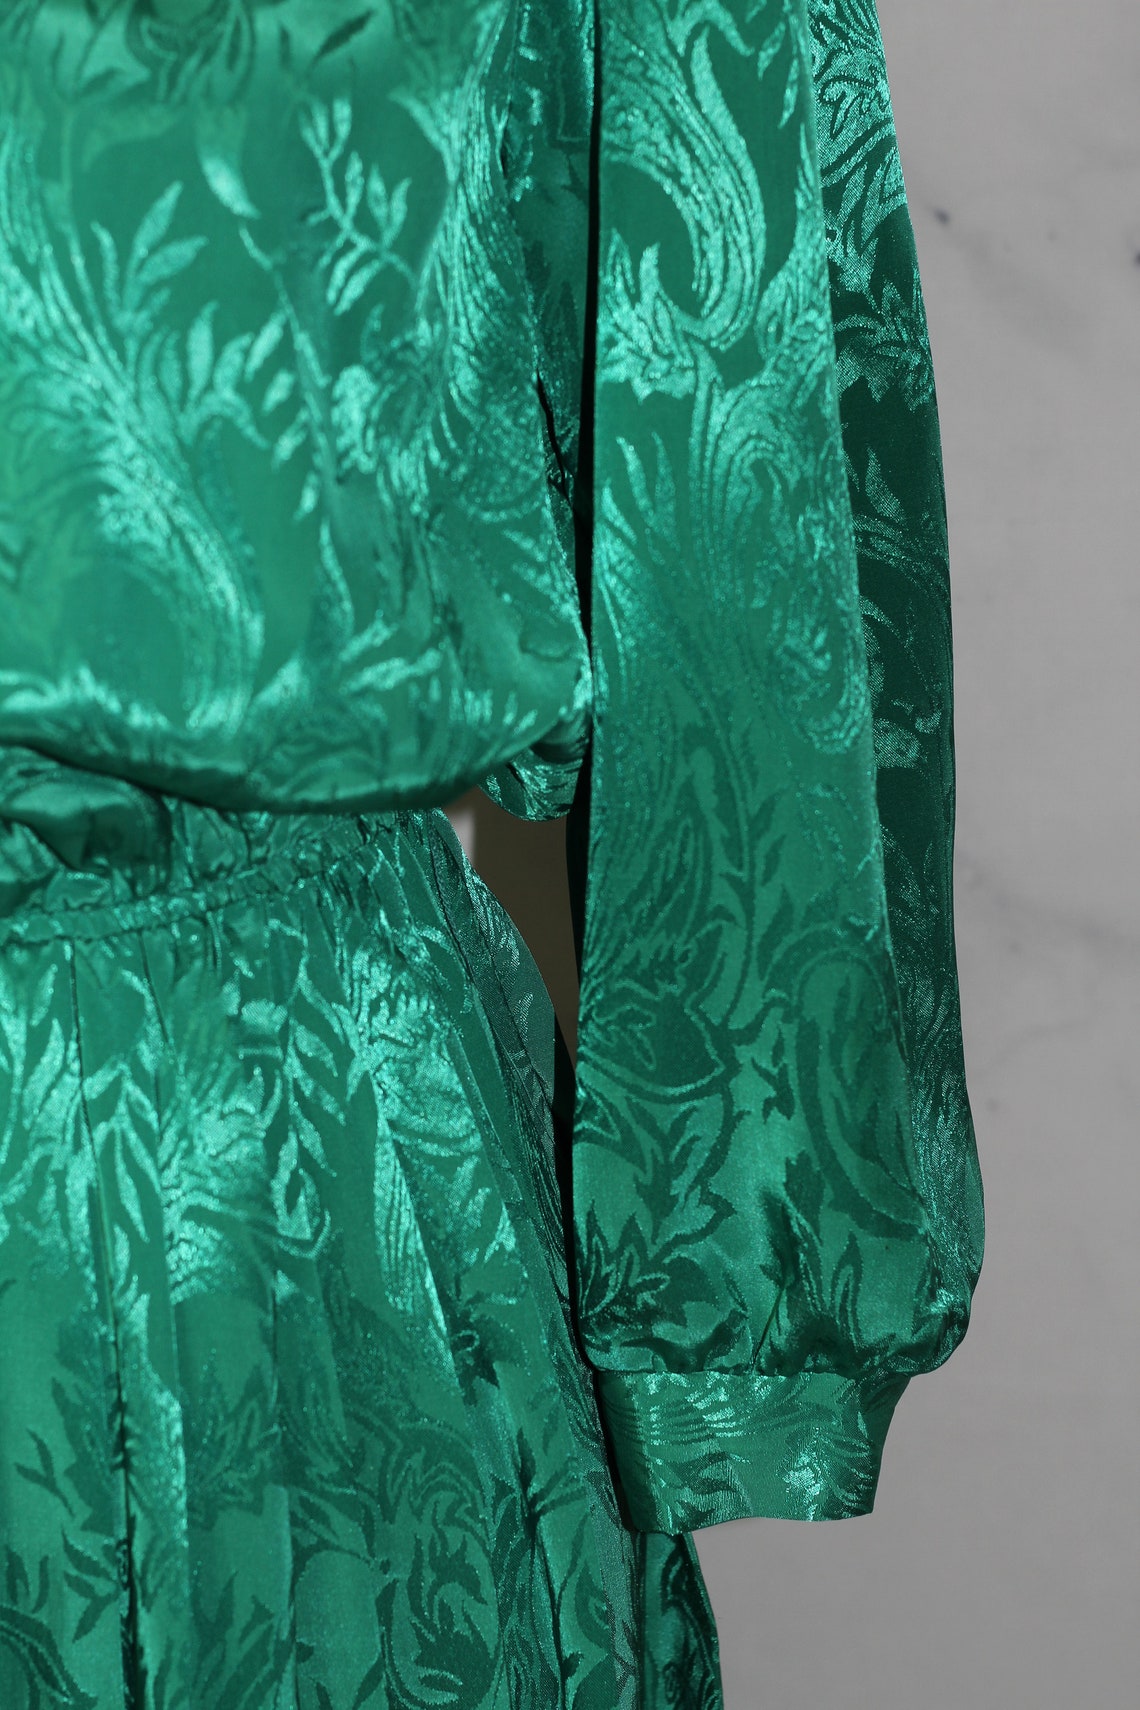 Alexis Fashion Inc Green A-Line Dress 9-10 | Etsy